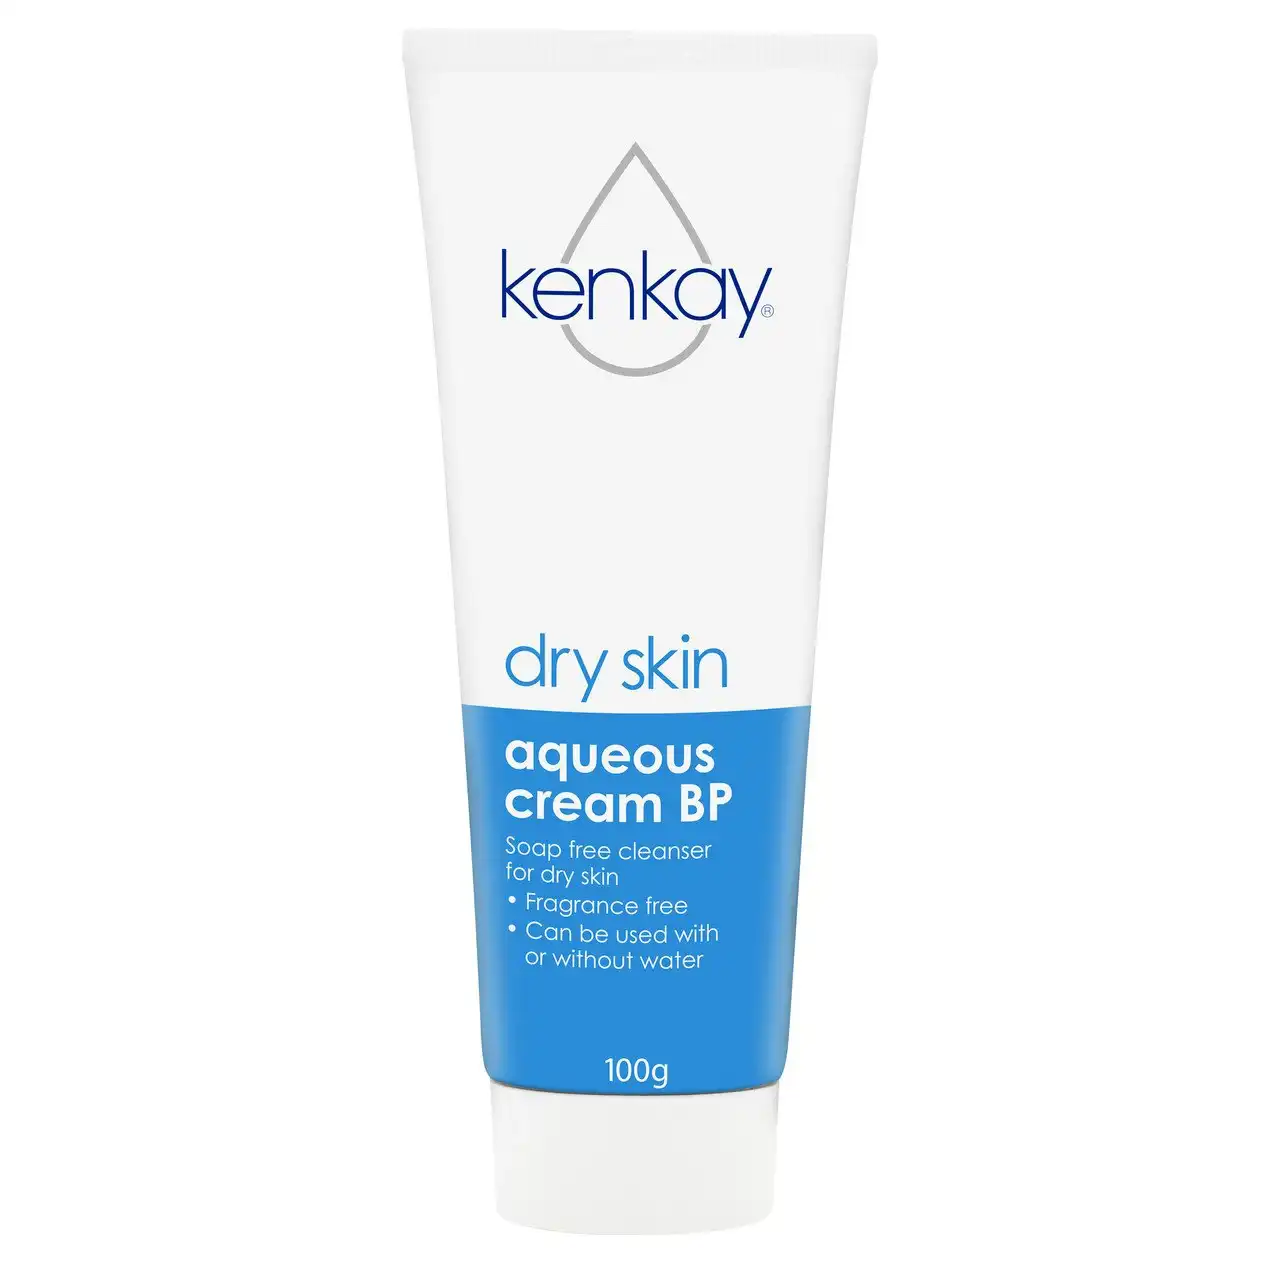 Kenkay Dry Skin Aqueous Cream BP 100g